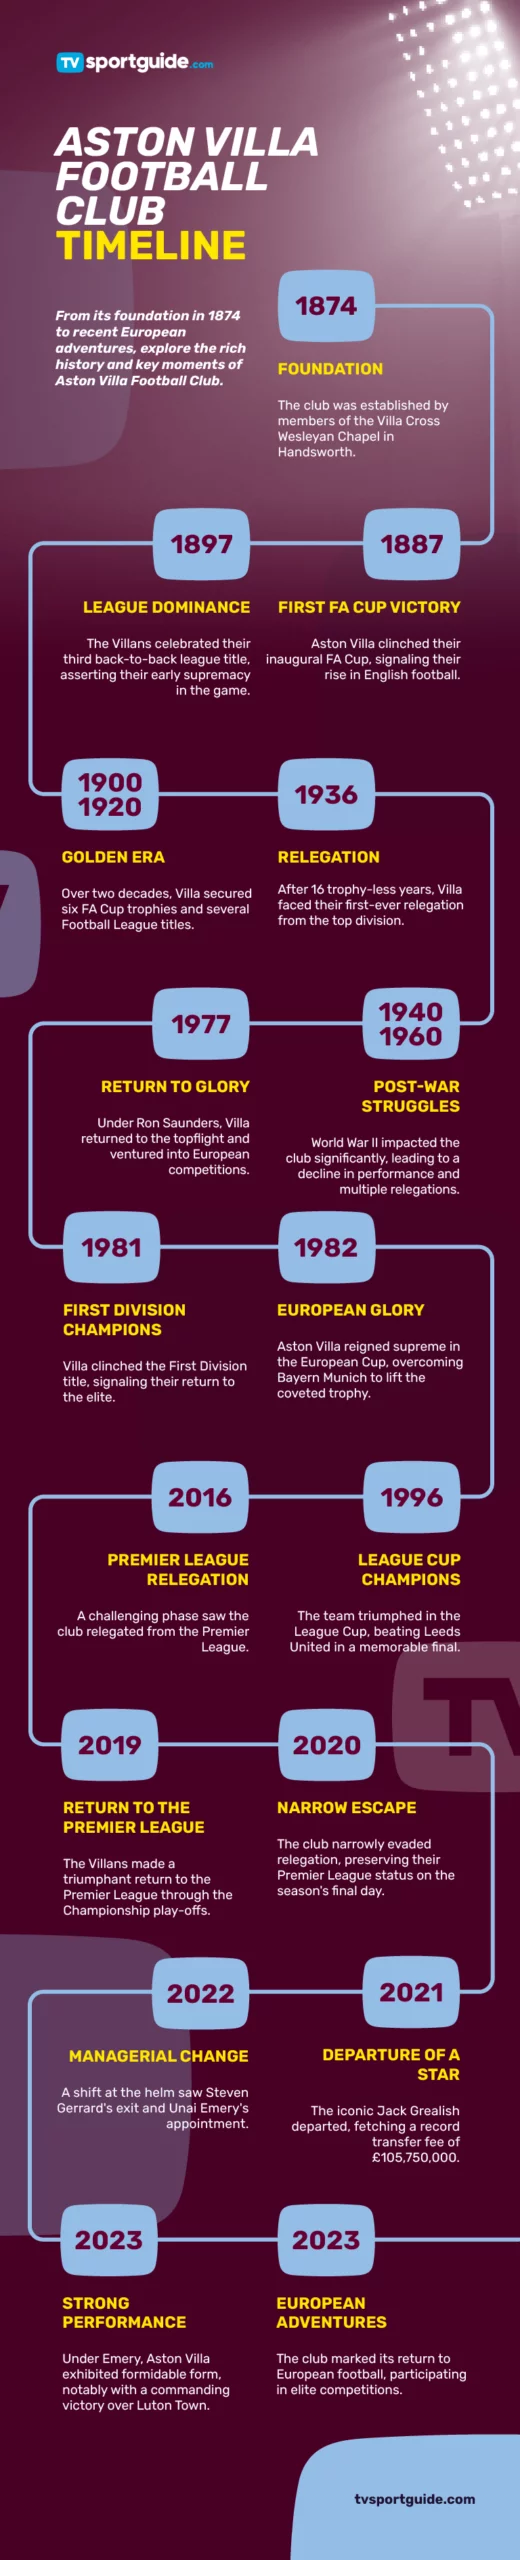 Aston Villa football club timeline